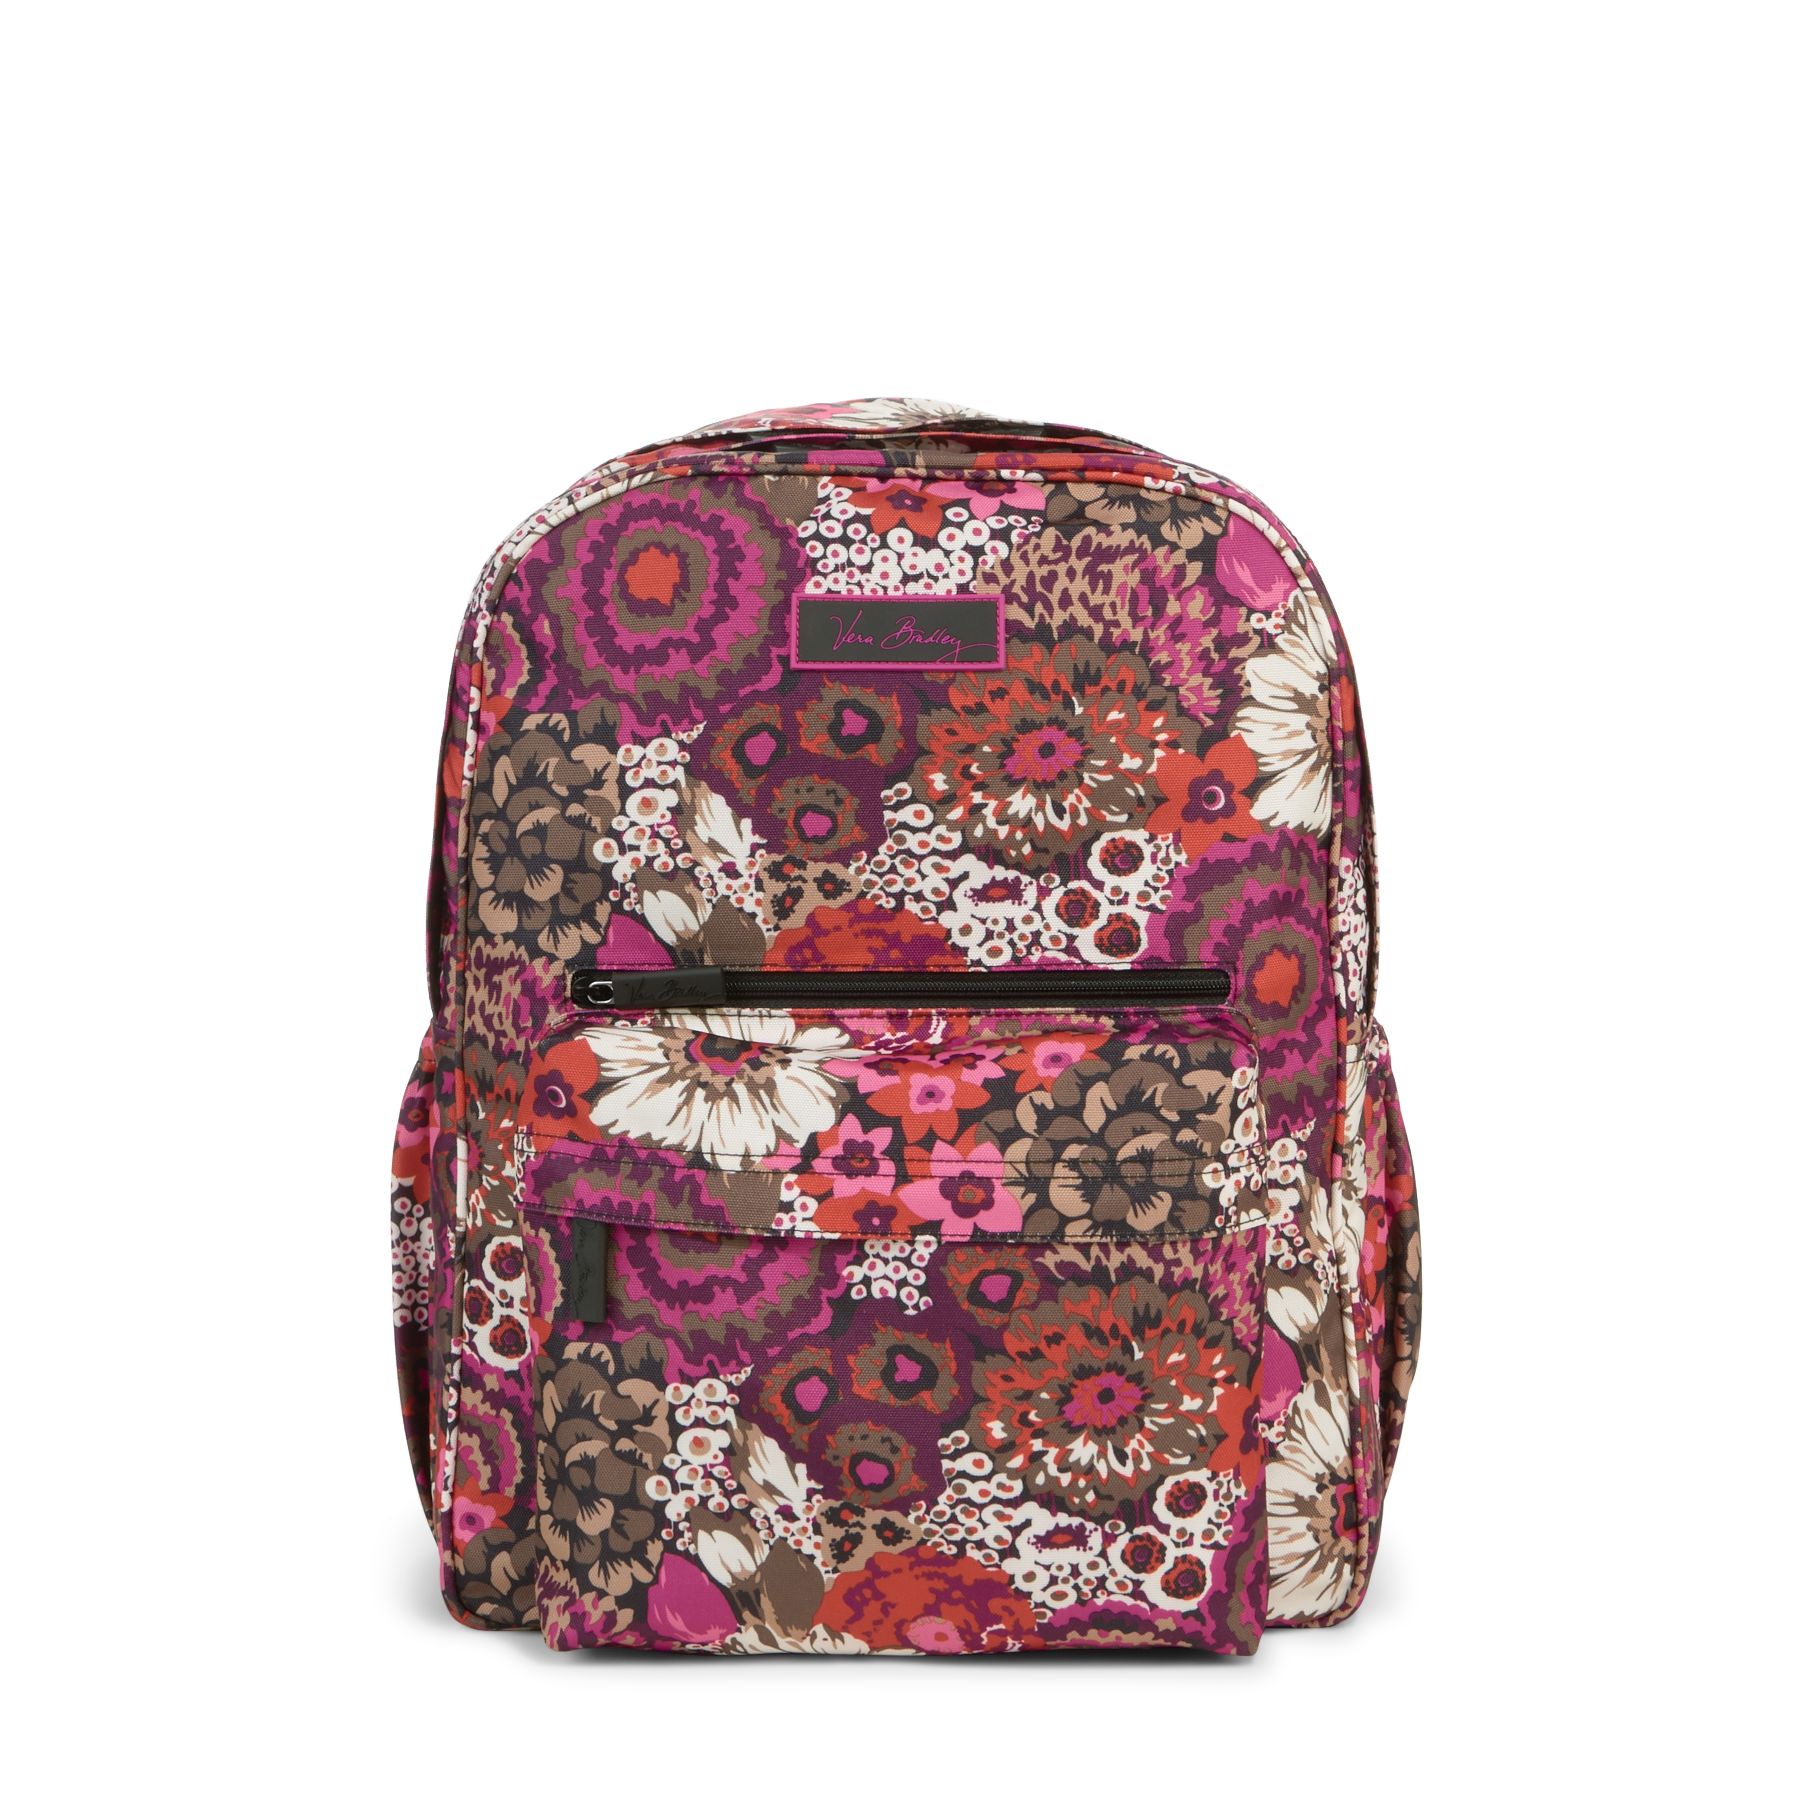 Vera Bradley Lighten Up Grande Backpack Bag | eBay